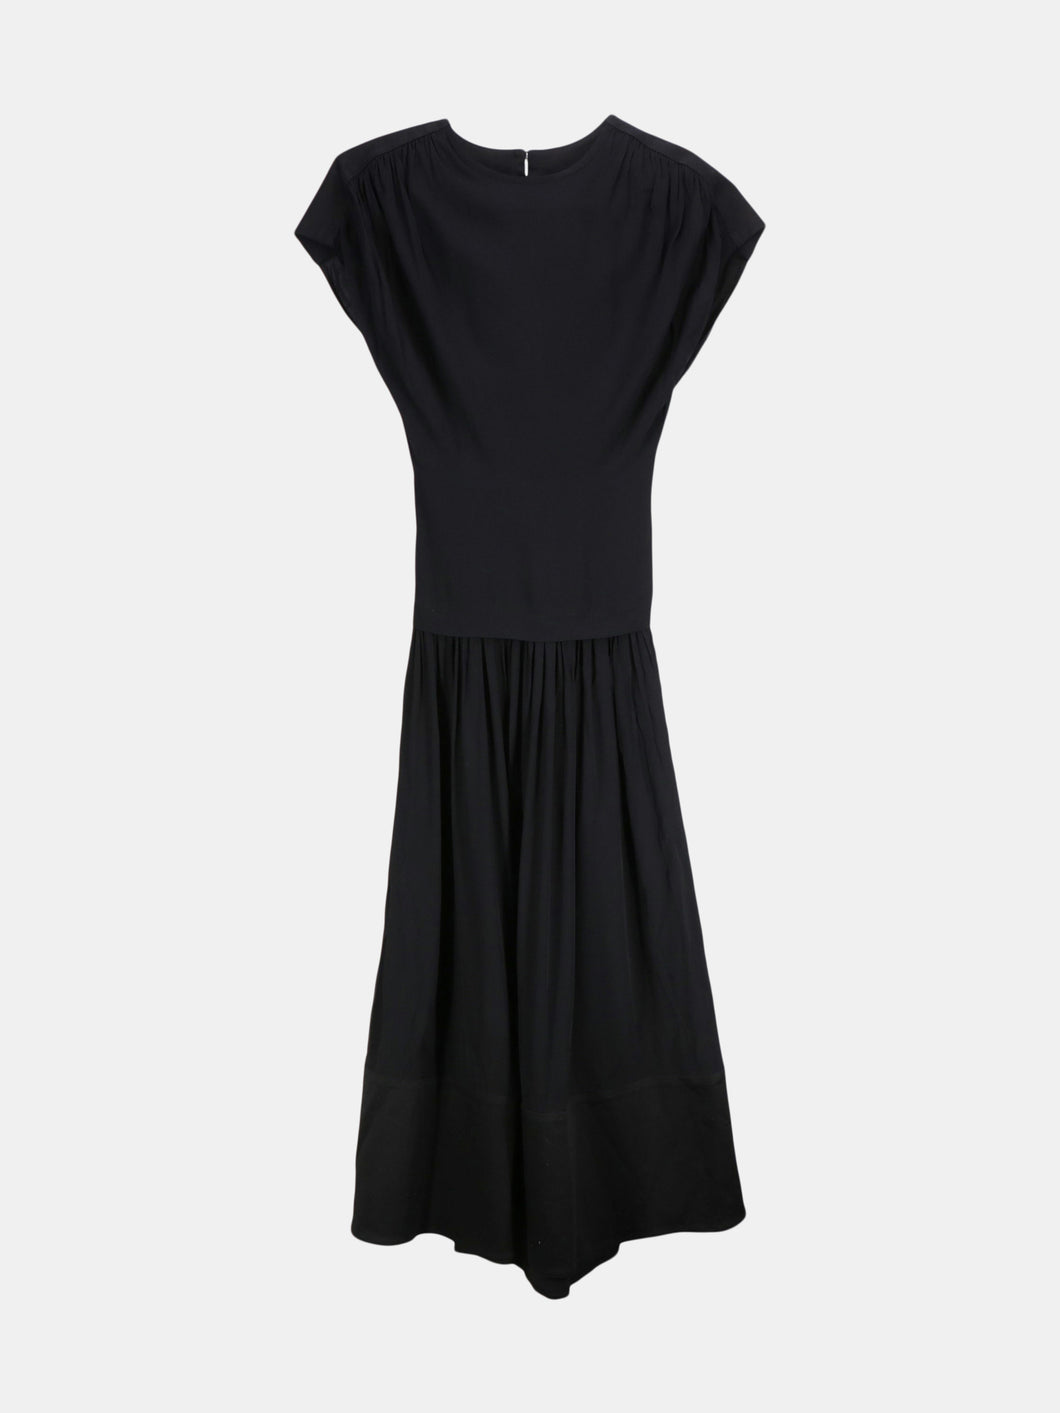 Proenza Schouler Women's Black LLC Dress